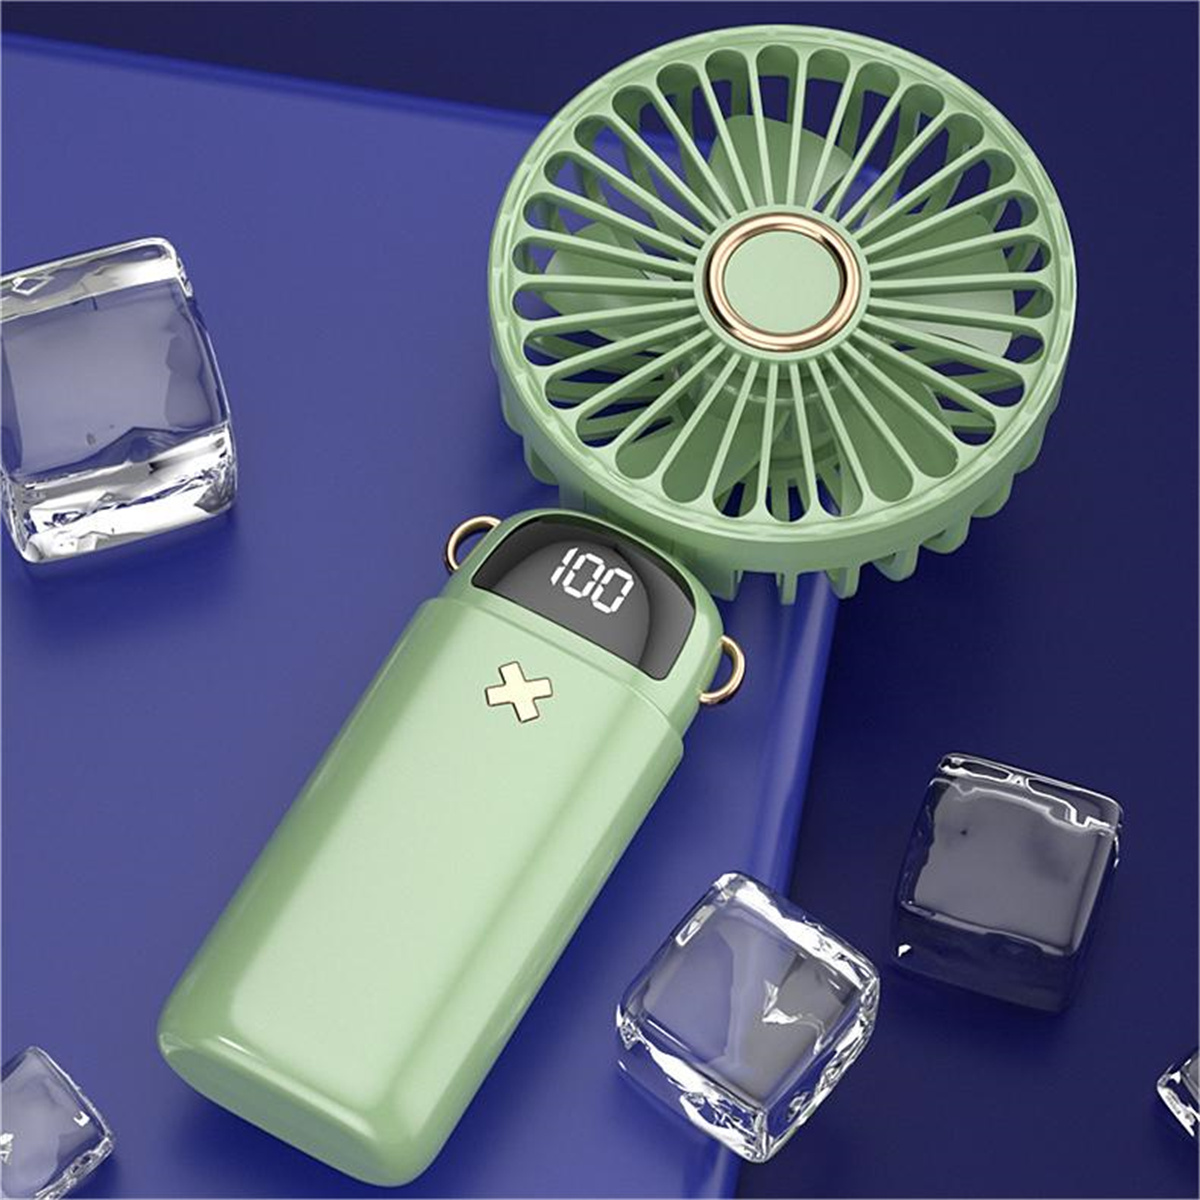 SYNTEK Fan tragbar Grün grün kleine Aromatherapie Fan wiederaufladbare Desktop digitale Hals Ventilator USB